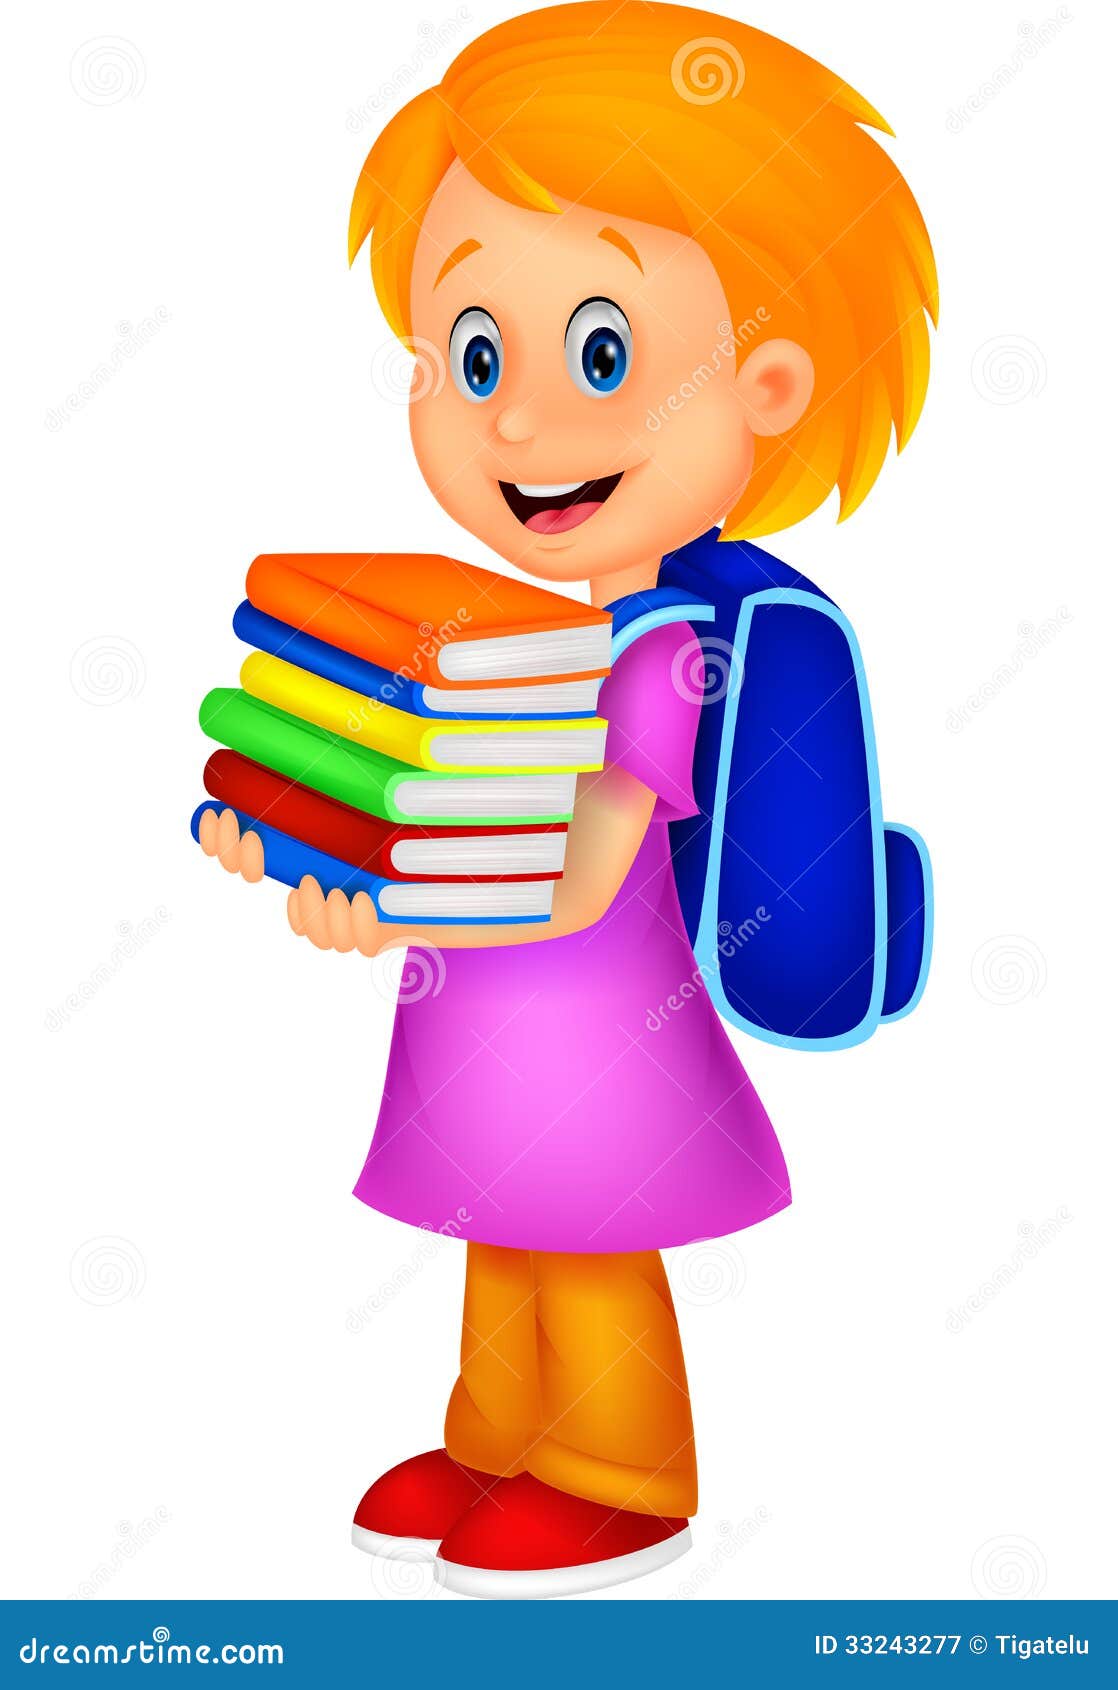 cartoon girl bring pile of books